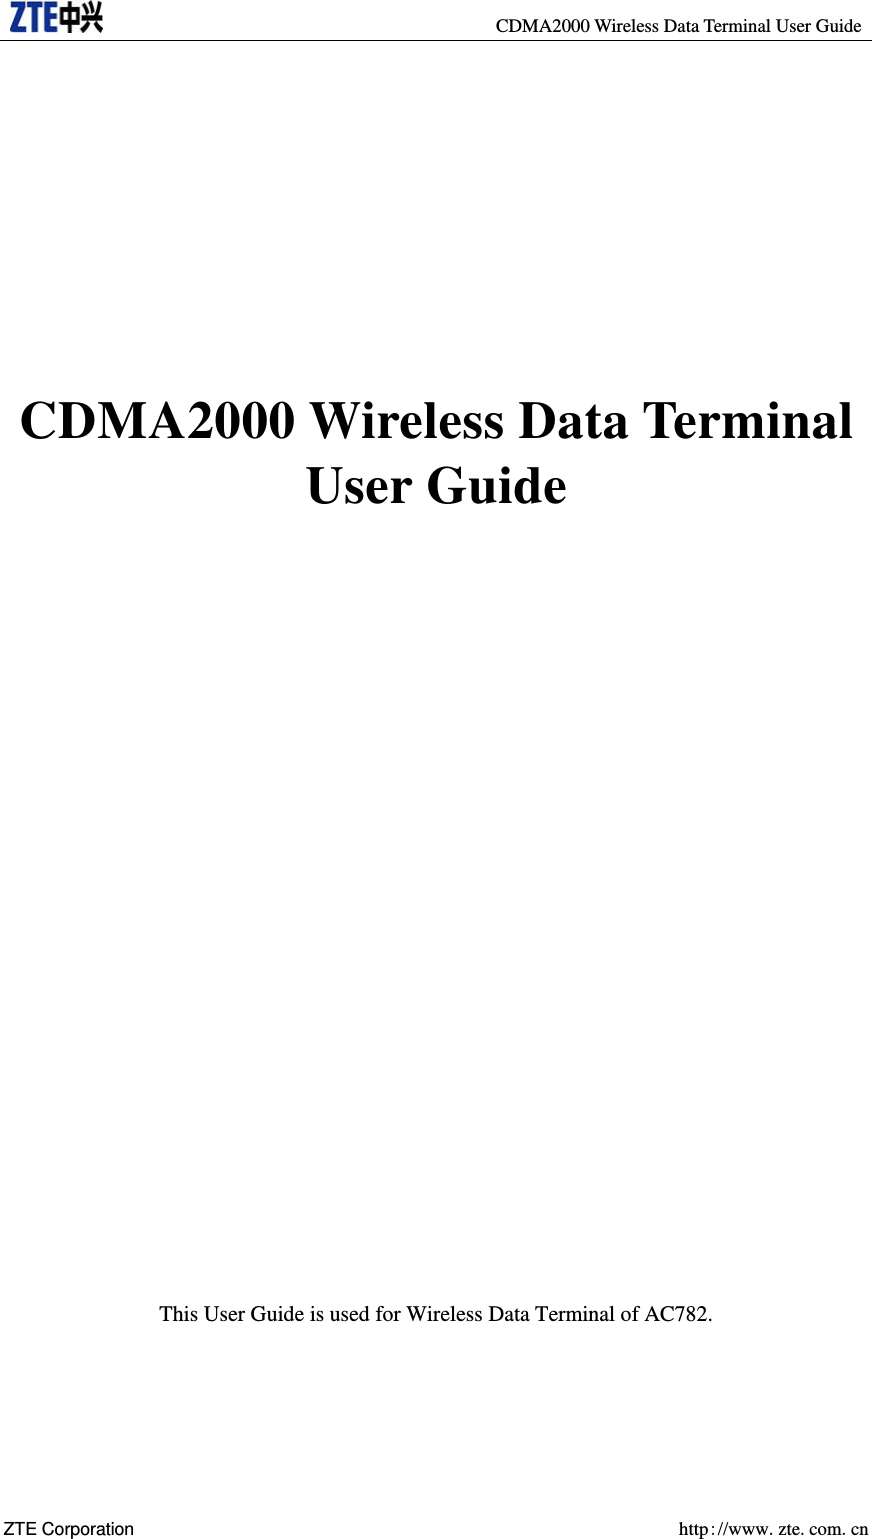                                           CDMA2000 Wireless Data Terminal User Guide ZTE Corporation  http://www.zte.com.cn        CDMA2000 Wireless Data Terminal User Guide                         This User Guide is used for Wireless Data Terminal of AC782. 